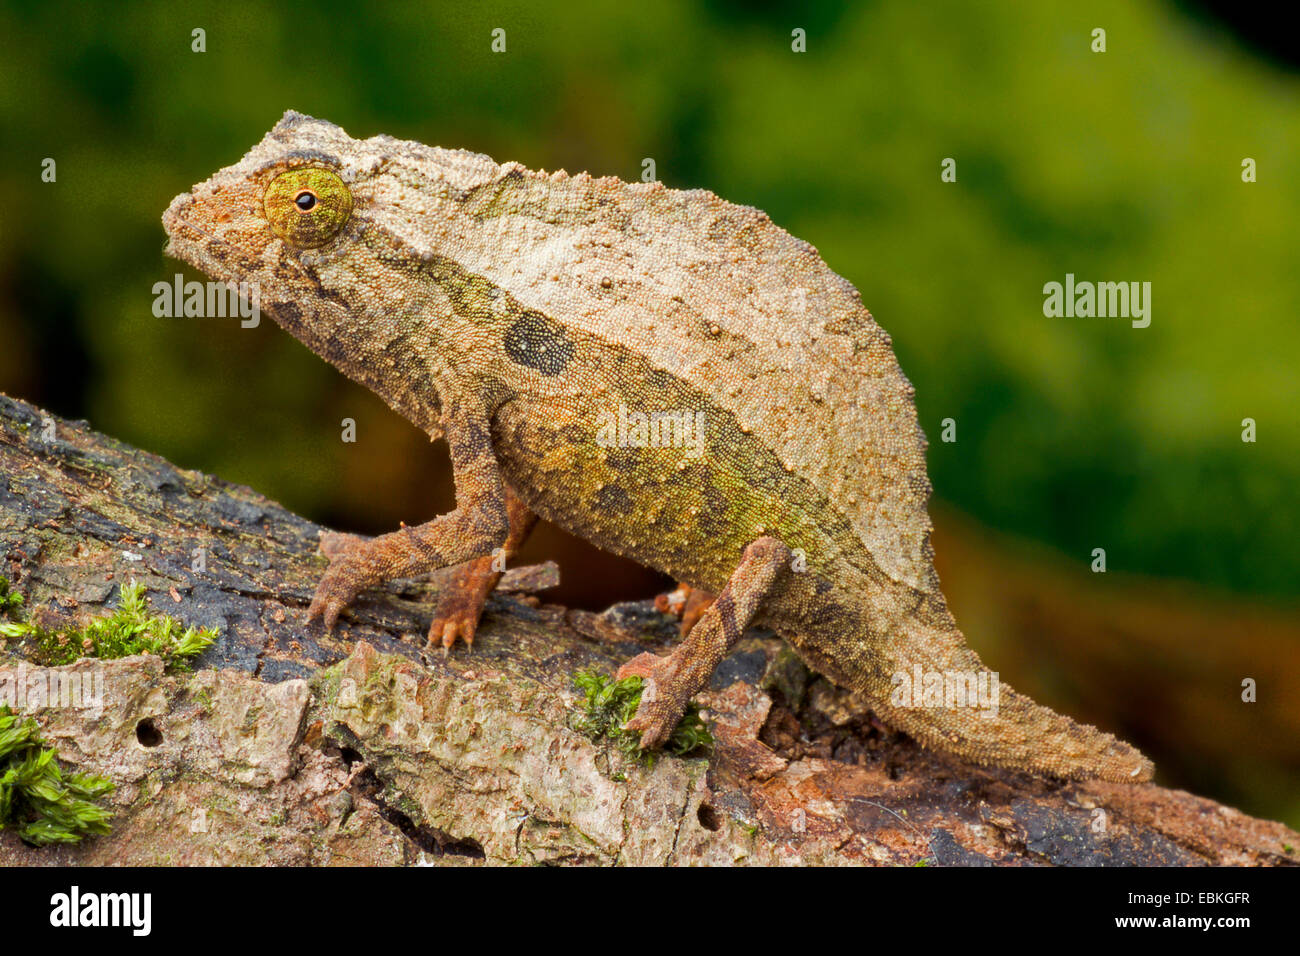 Stump Tailed Chameleon (Rieppeleon brevicaudatus), sitting on a twig Stock Photo